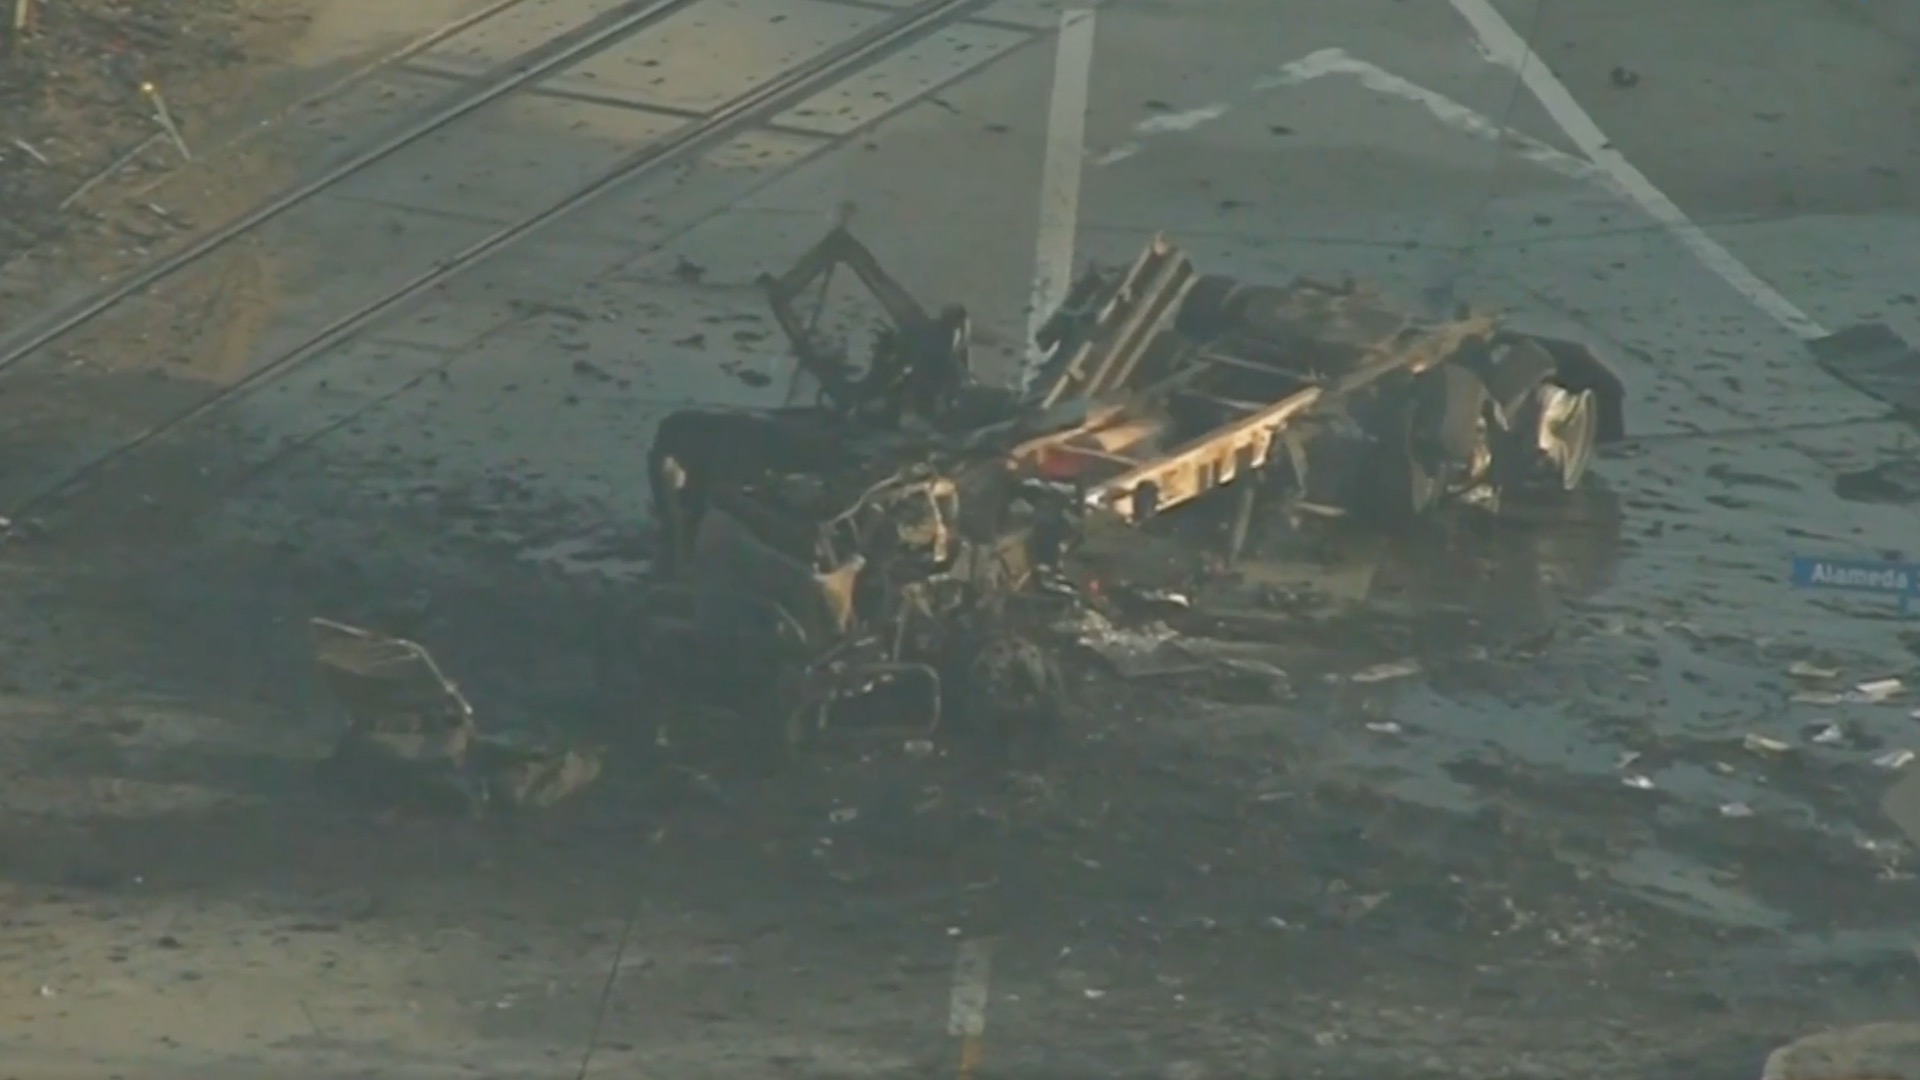 Truck explosion leaves people injured: Los Angeles, CA.